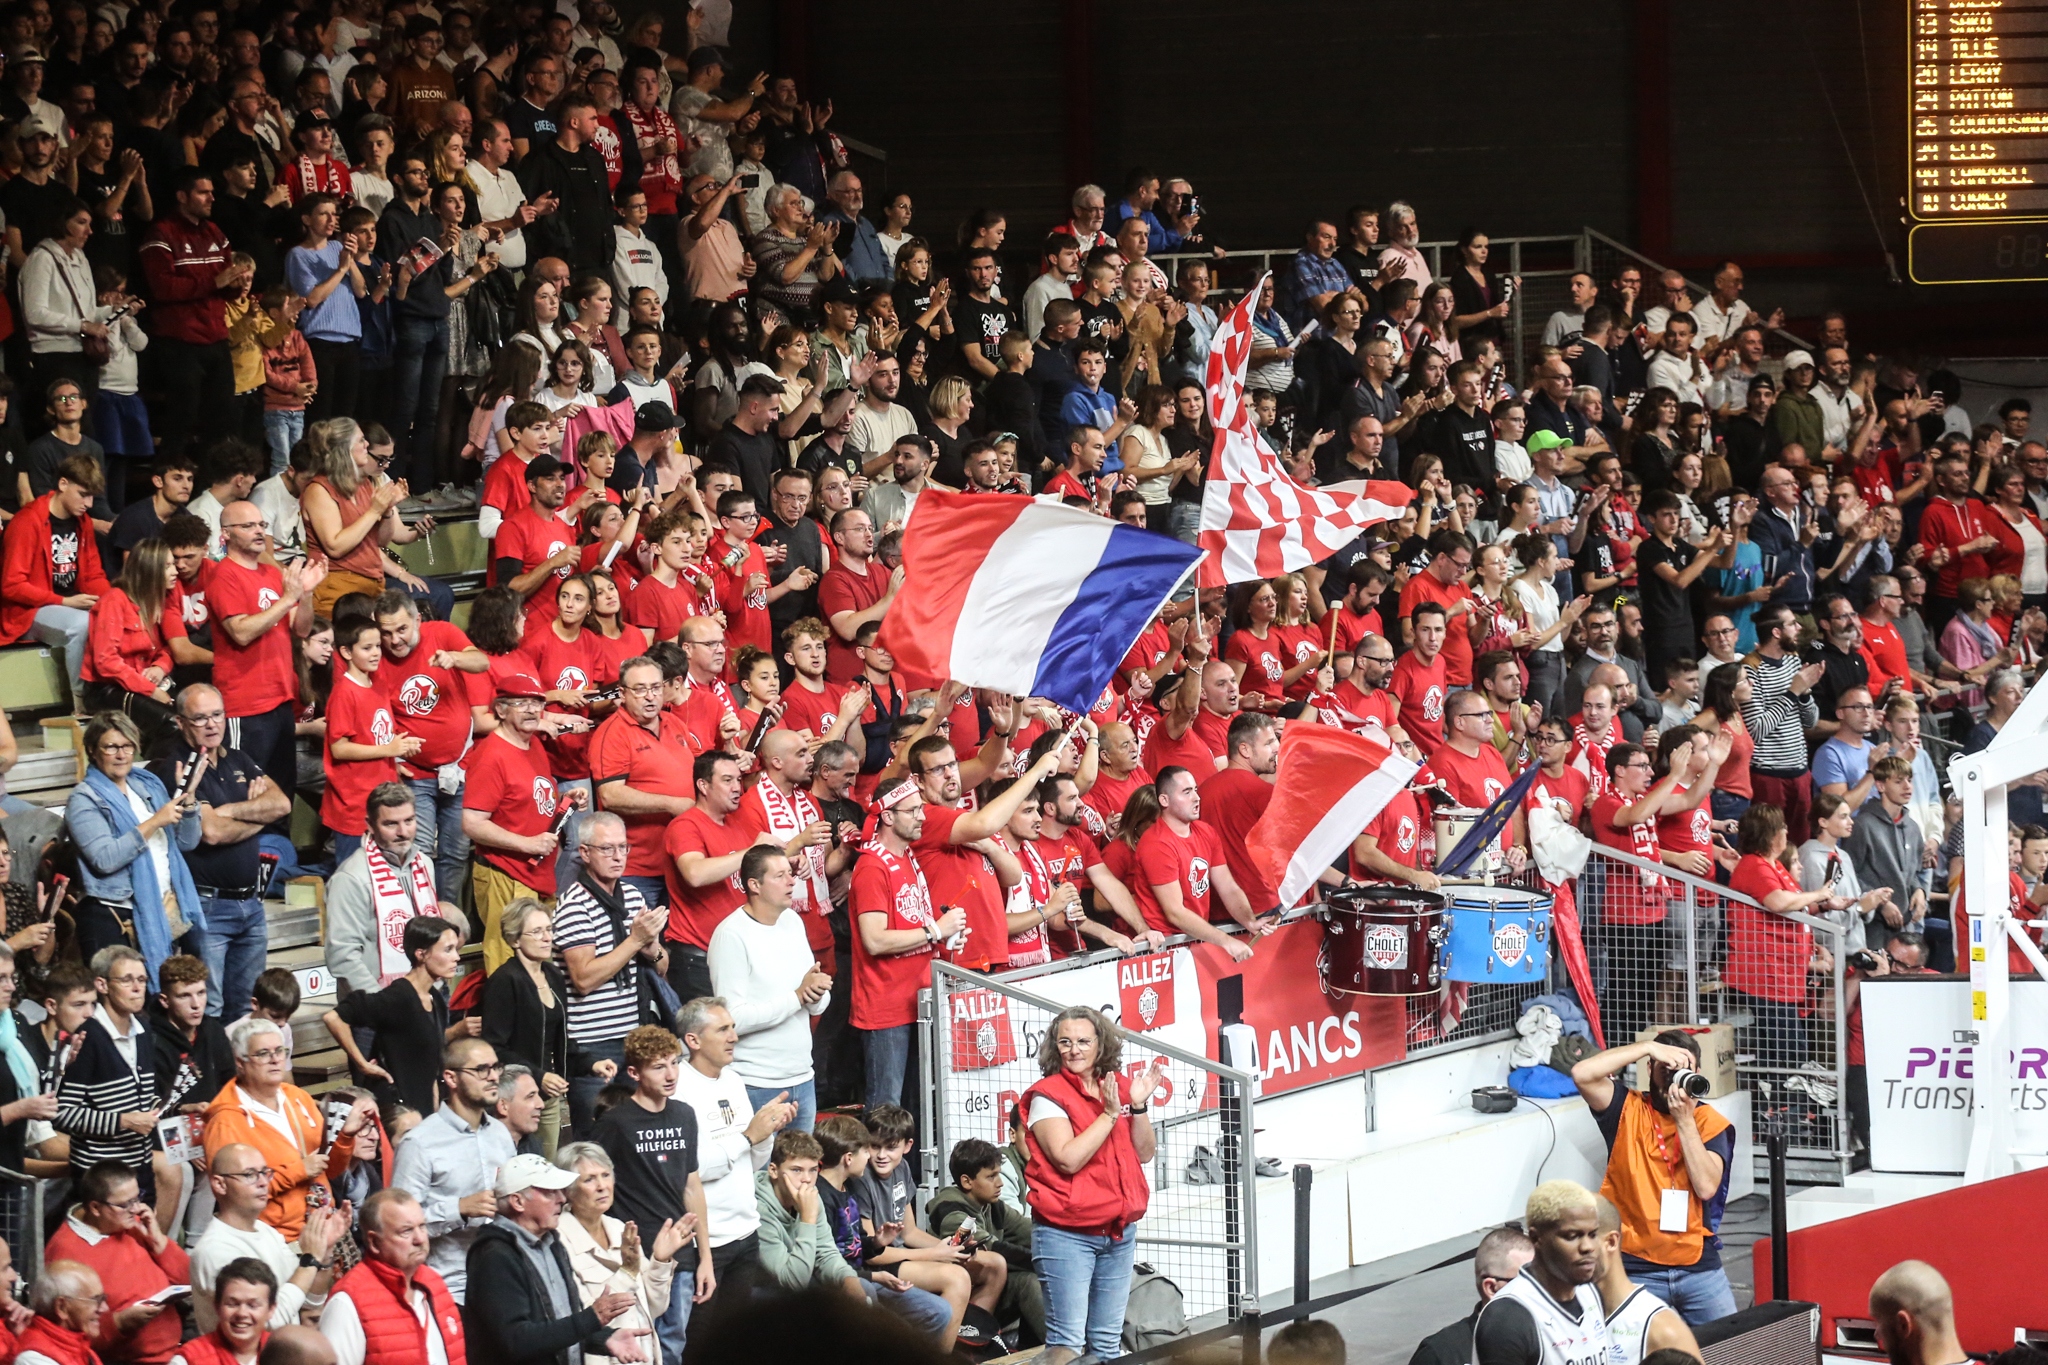 Les Reds vs ASVEL Lyon-Villeurbanne (25-09-22)